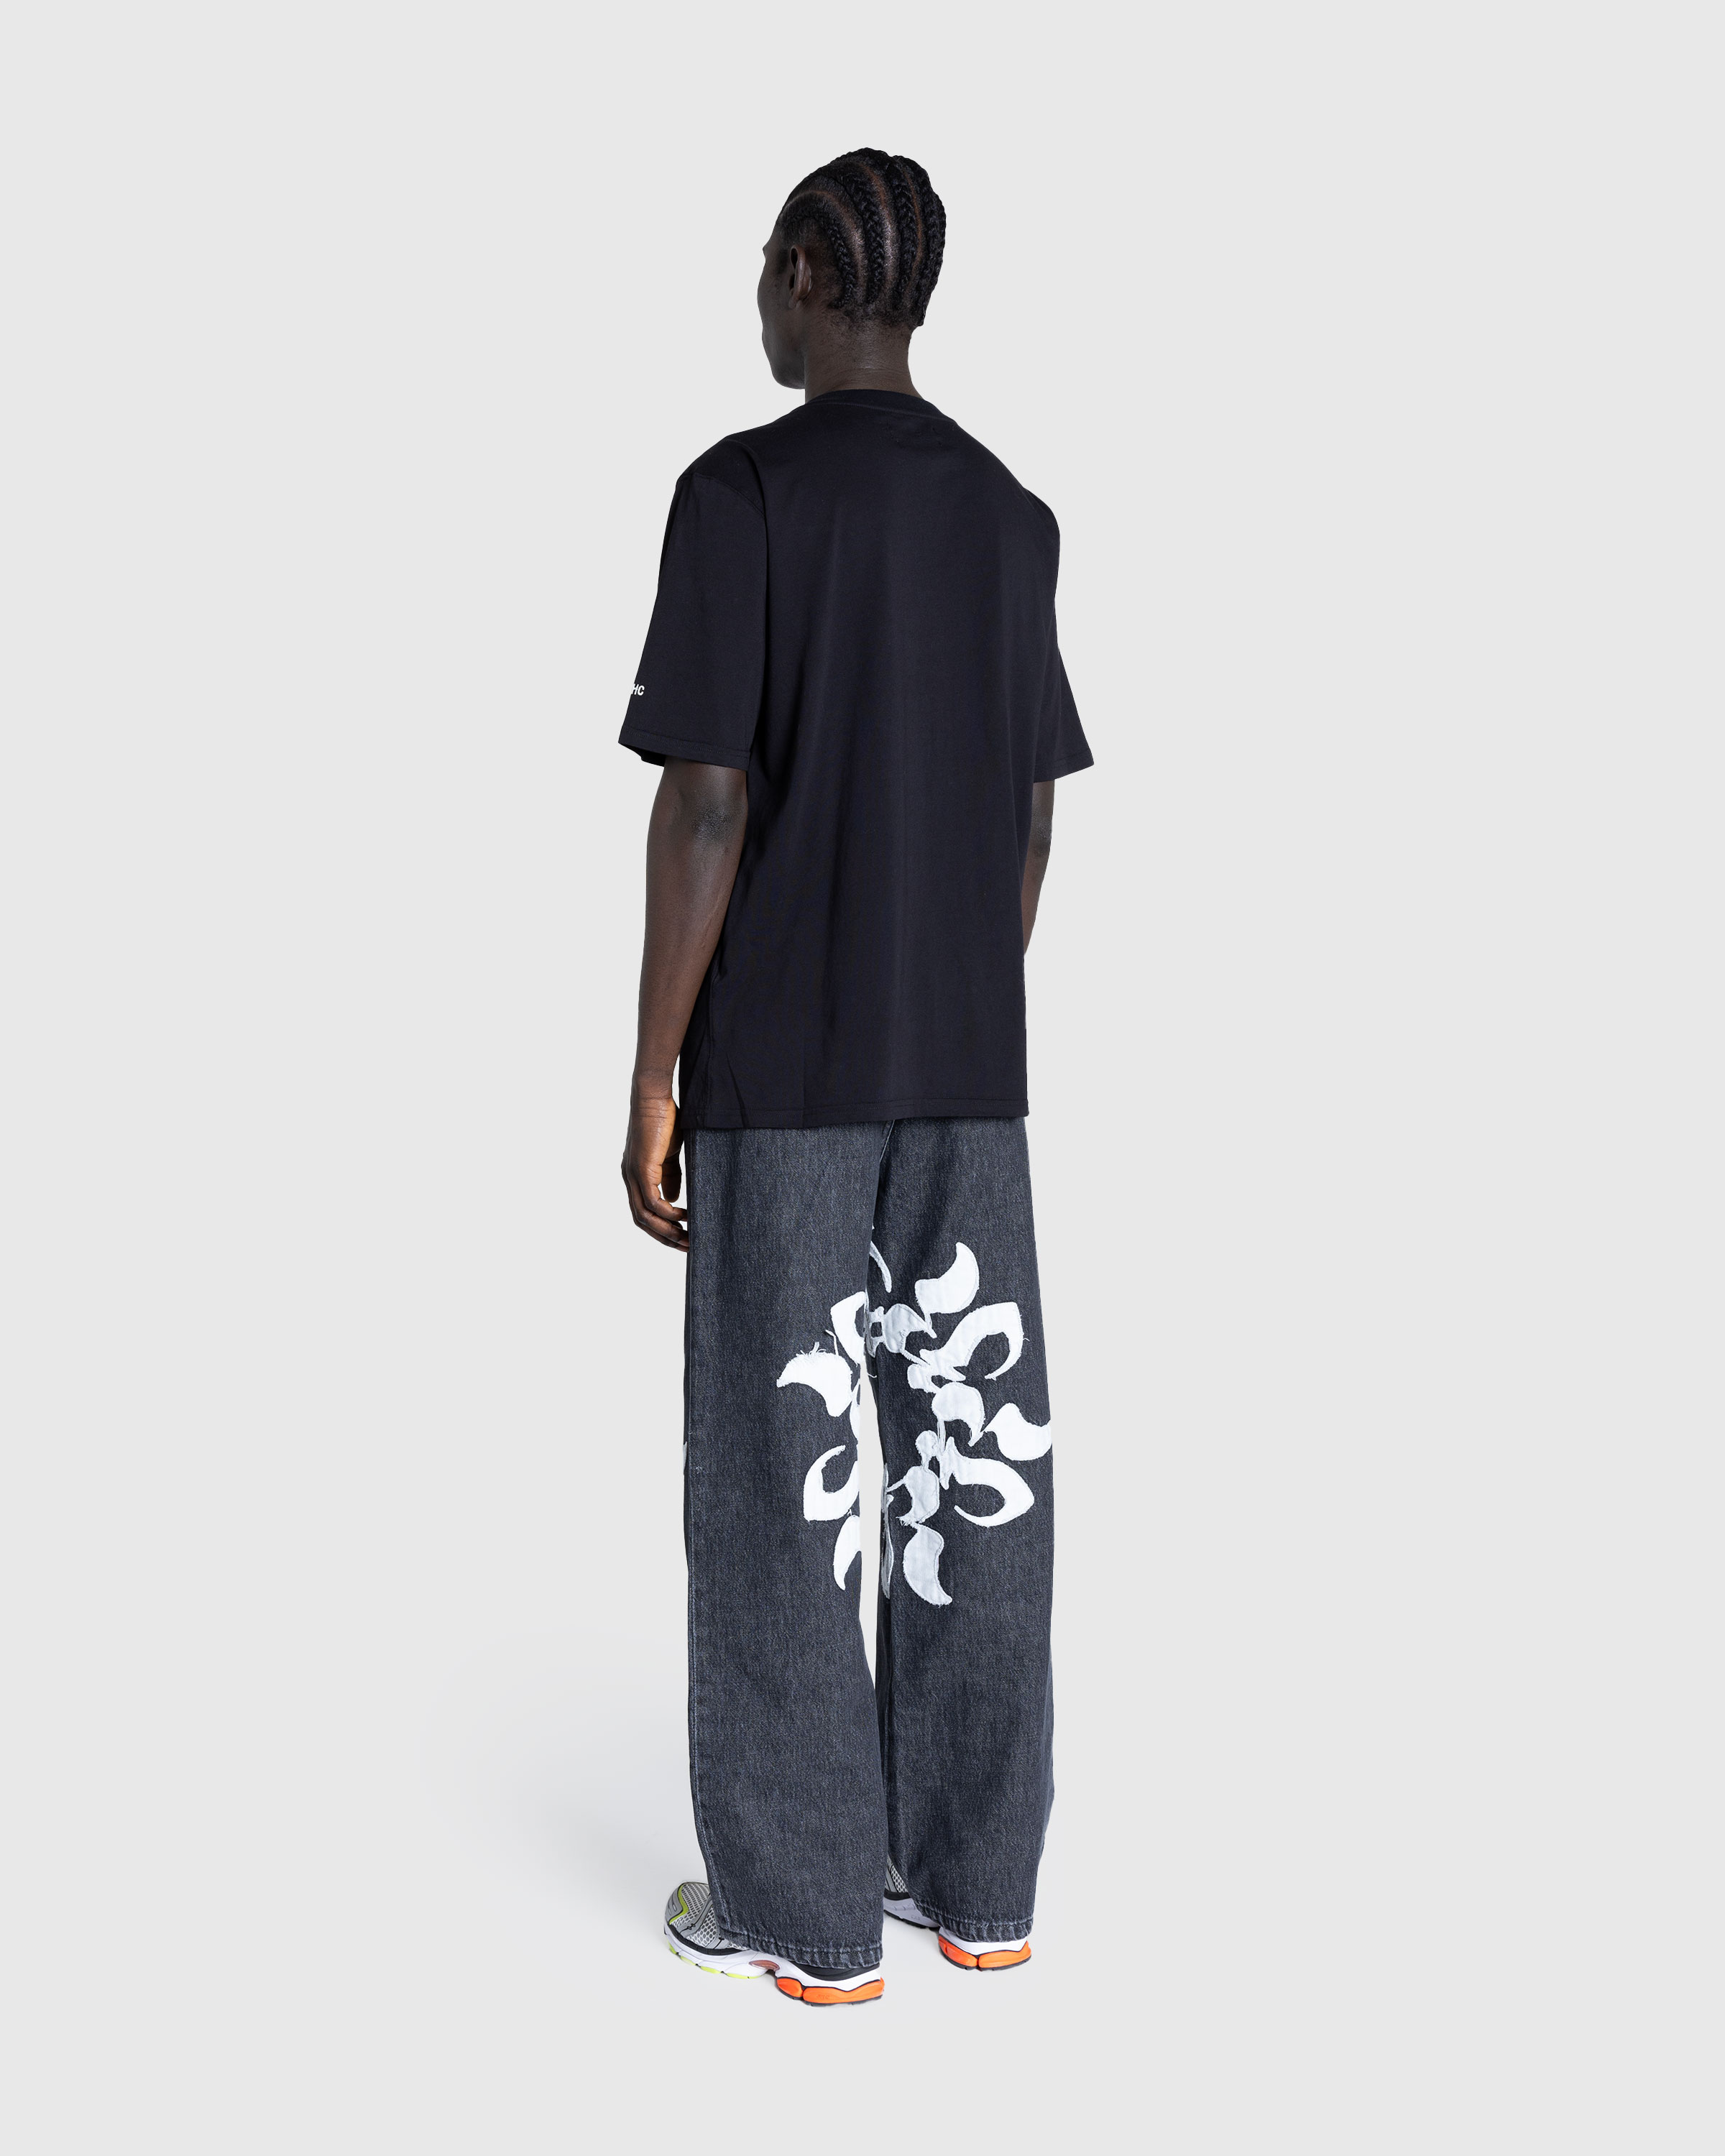 KUSIKOHC – Origami T-Shirt Black/White Alyssum - Tops - Black - Image 4